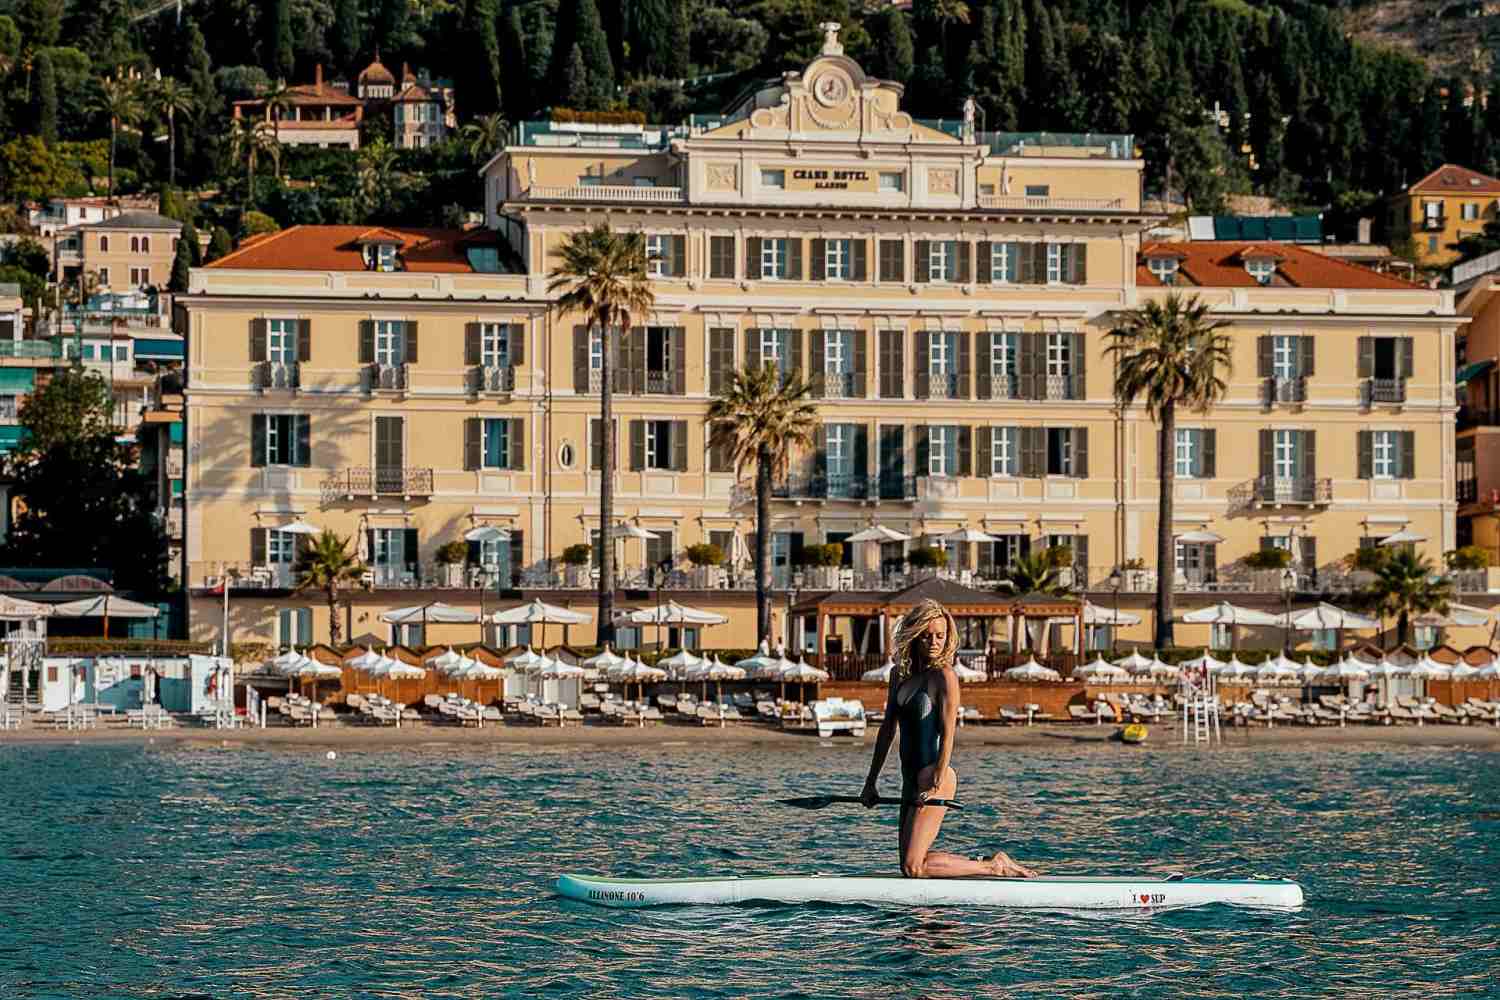 Grand Hotel Alassio Resort & Spa, Liguria - Italy